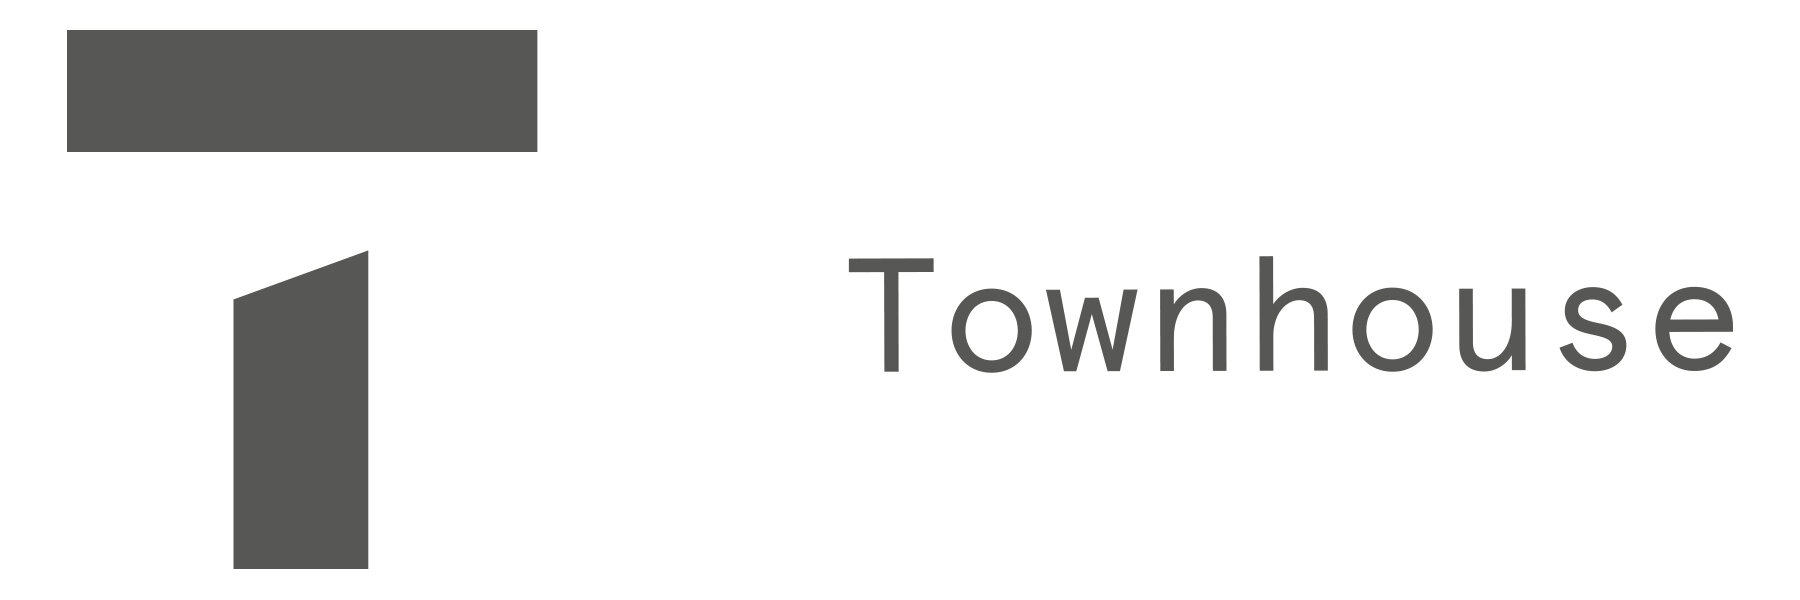 Townhouse_Logo.jpg